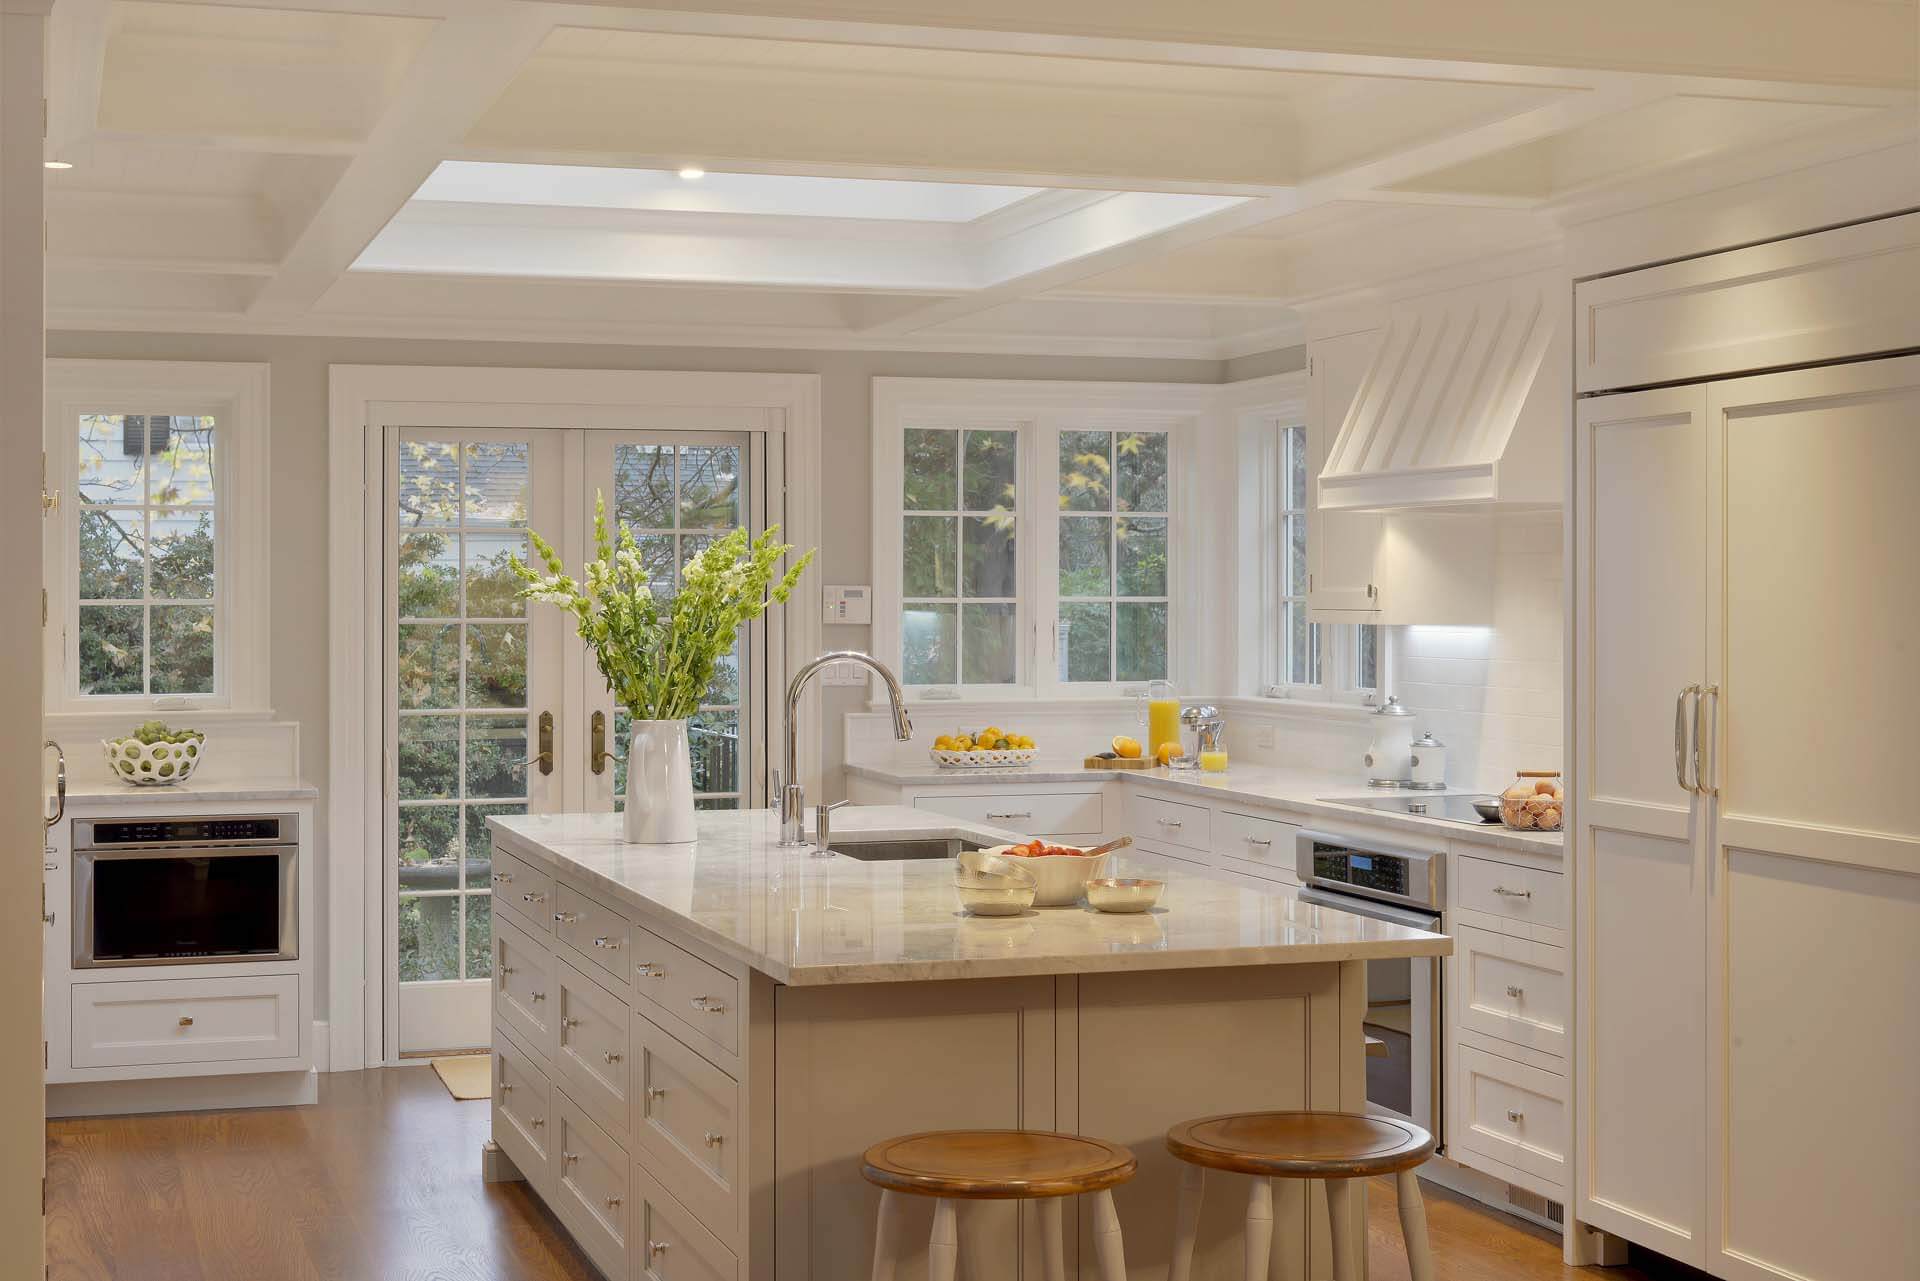 Elegant light-filled kitchen features Super White Rutt cabinetry, quartz countertops and marble subway backsplash.